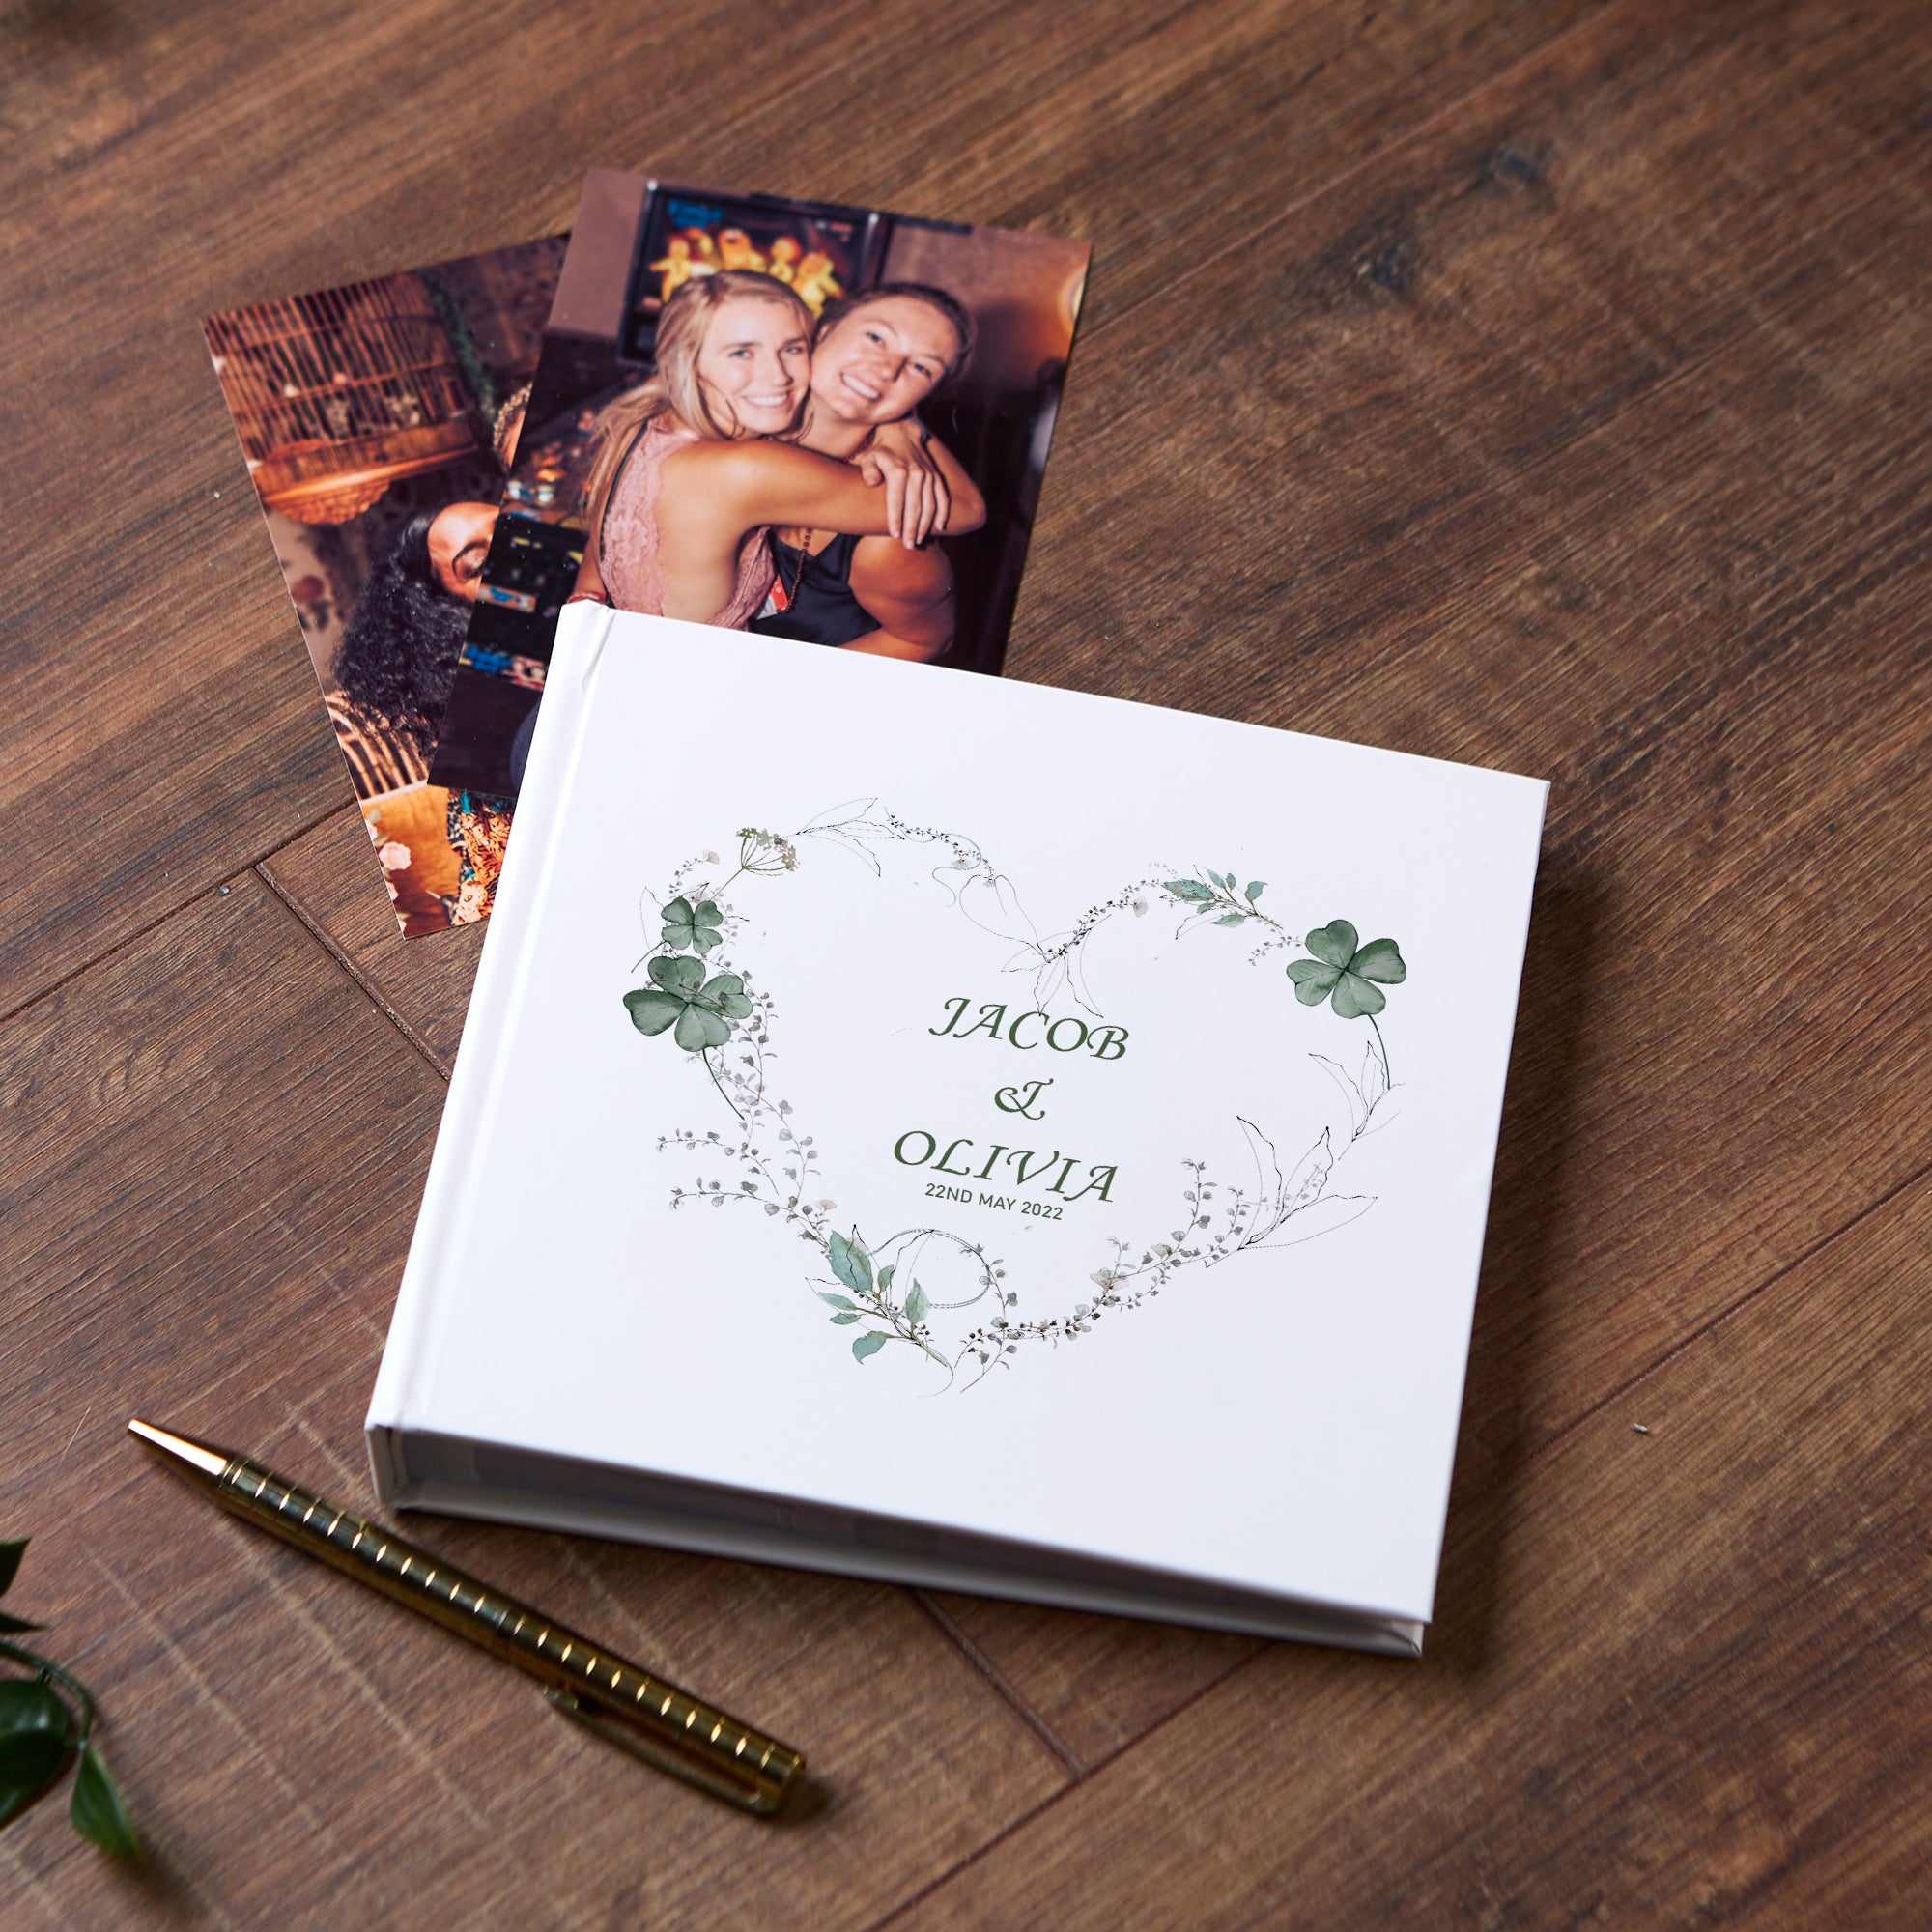 Personalised Wedding Photo Album Gift Green Clover Leaf Heart